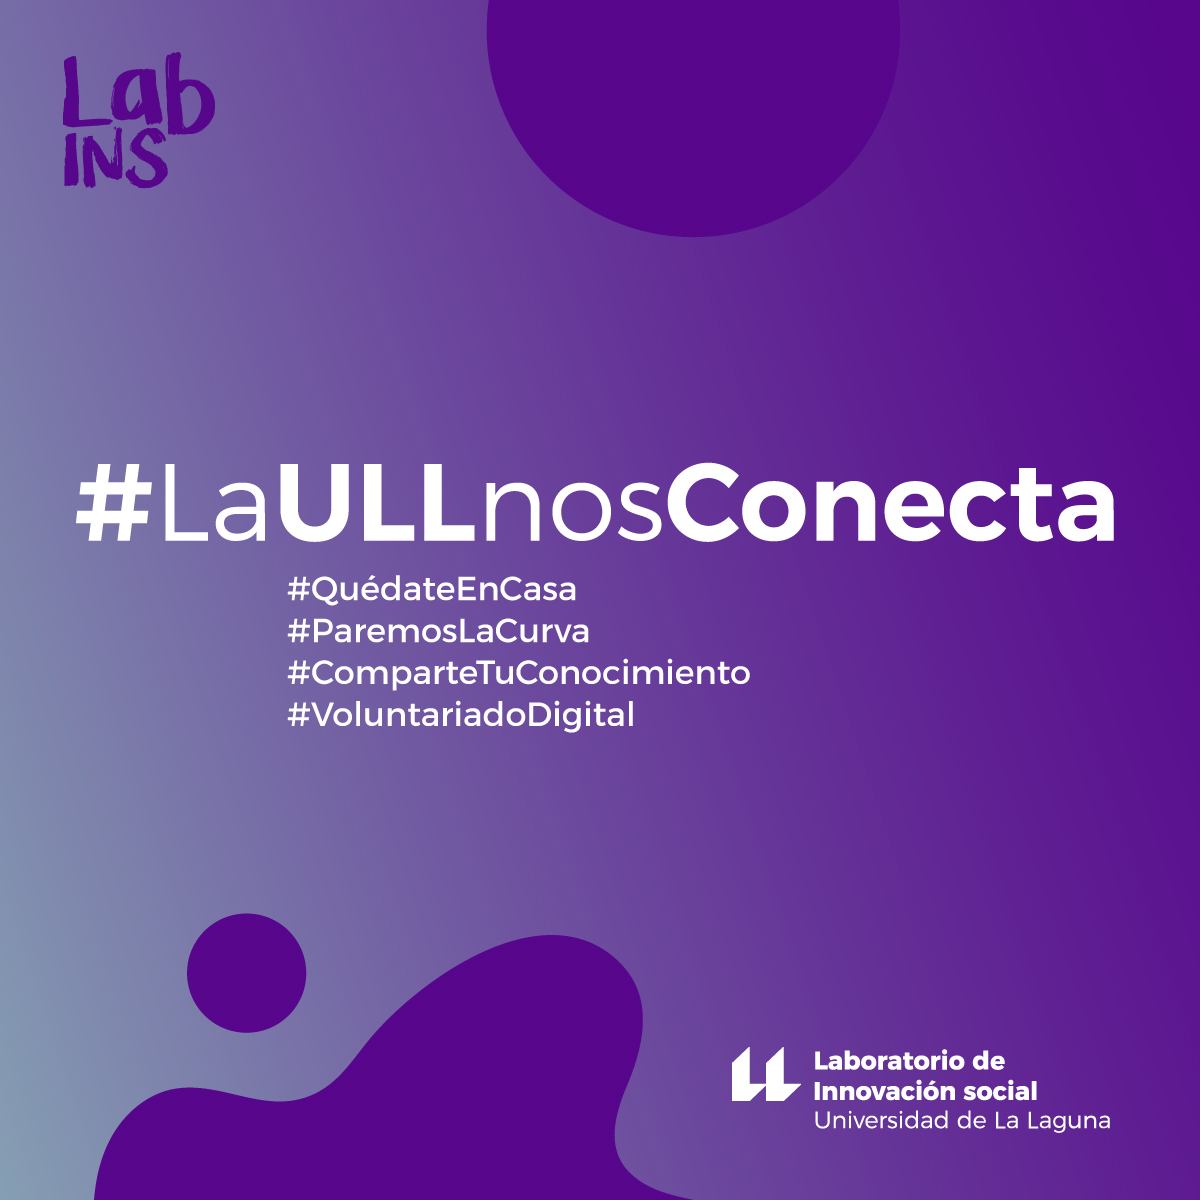 Iniciativas canarias - Labins - La ULL nos conecta - #LaULLnosConecta